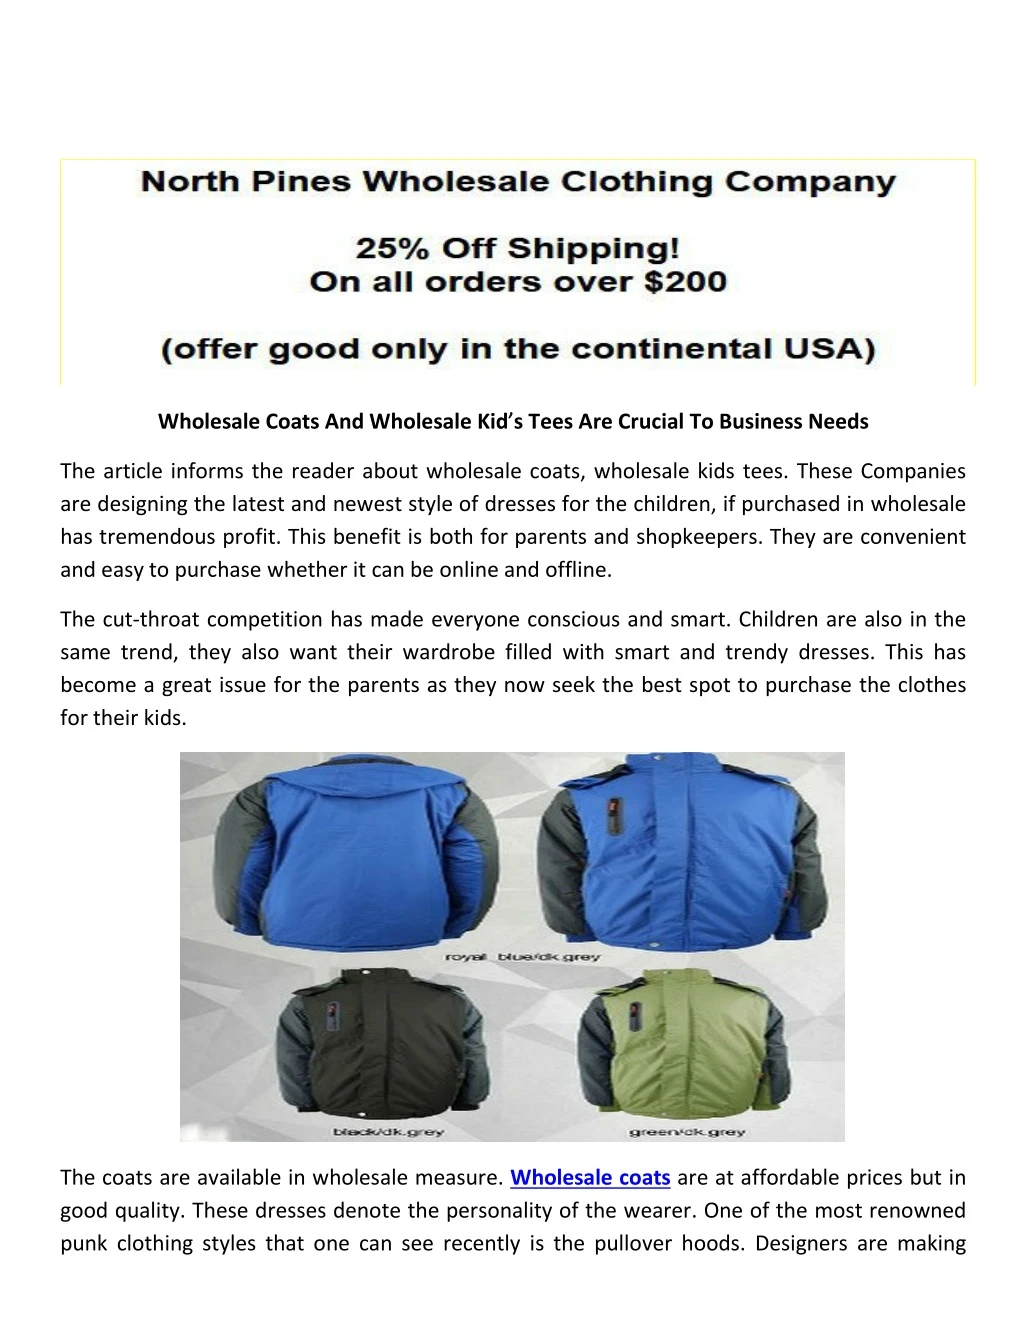 wholesale coats and wholesale kid s tees